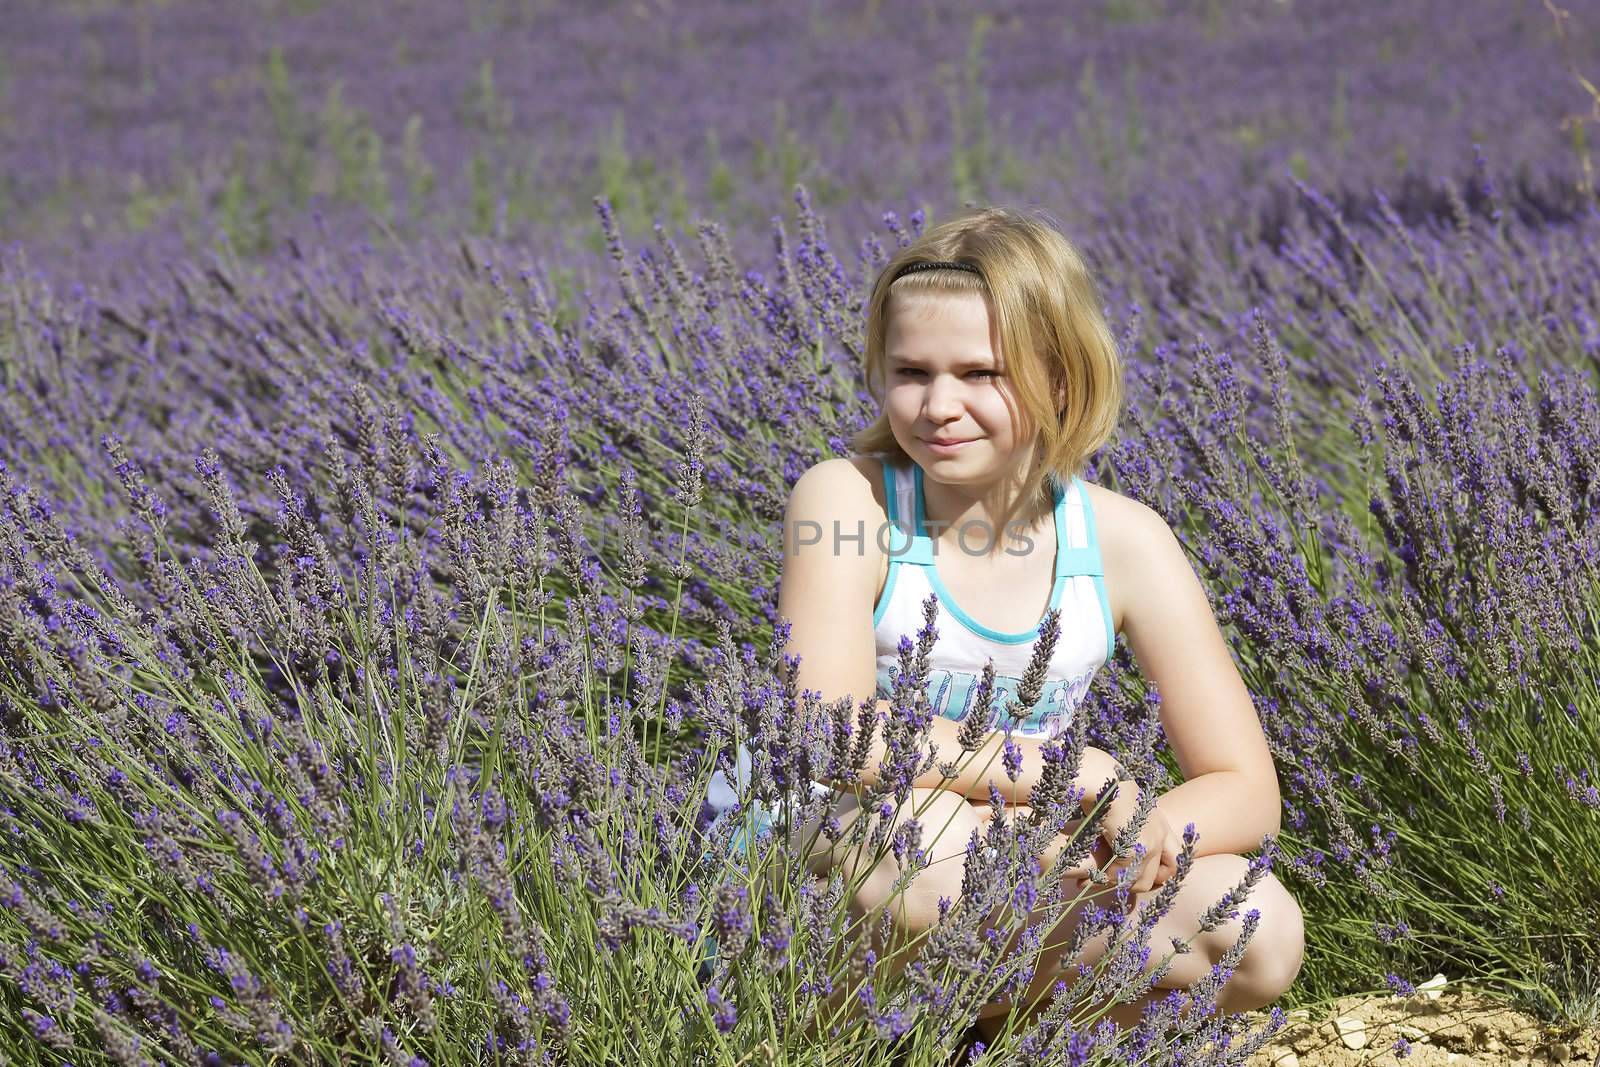  little girl in a lavender field  by miradrozdowski